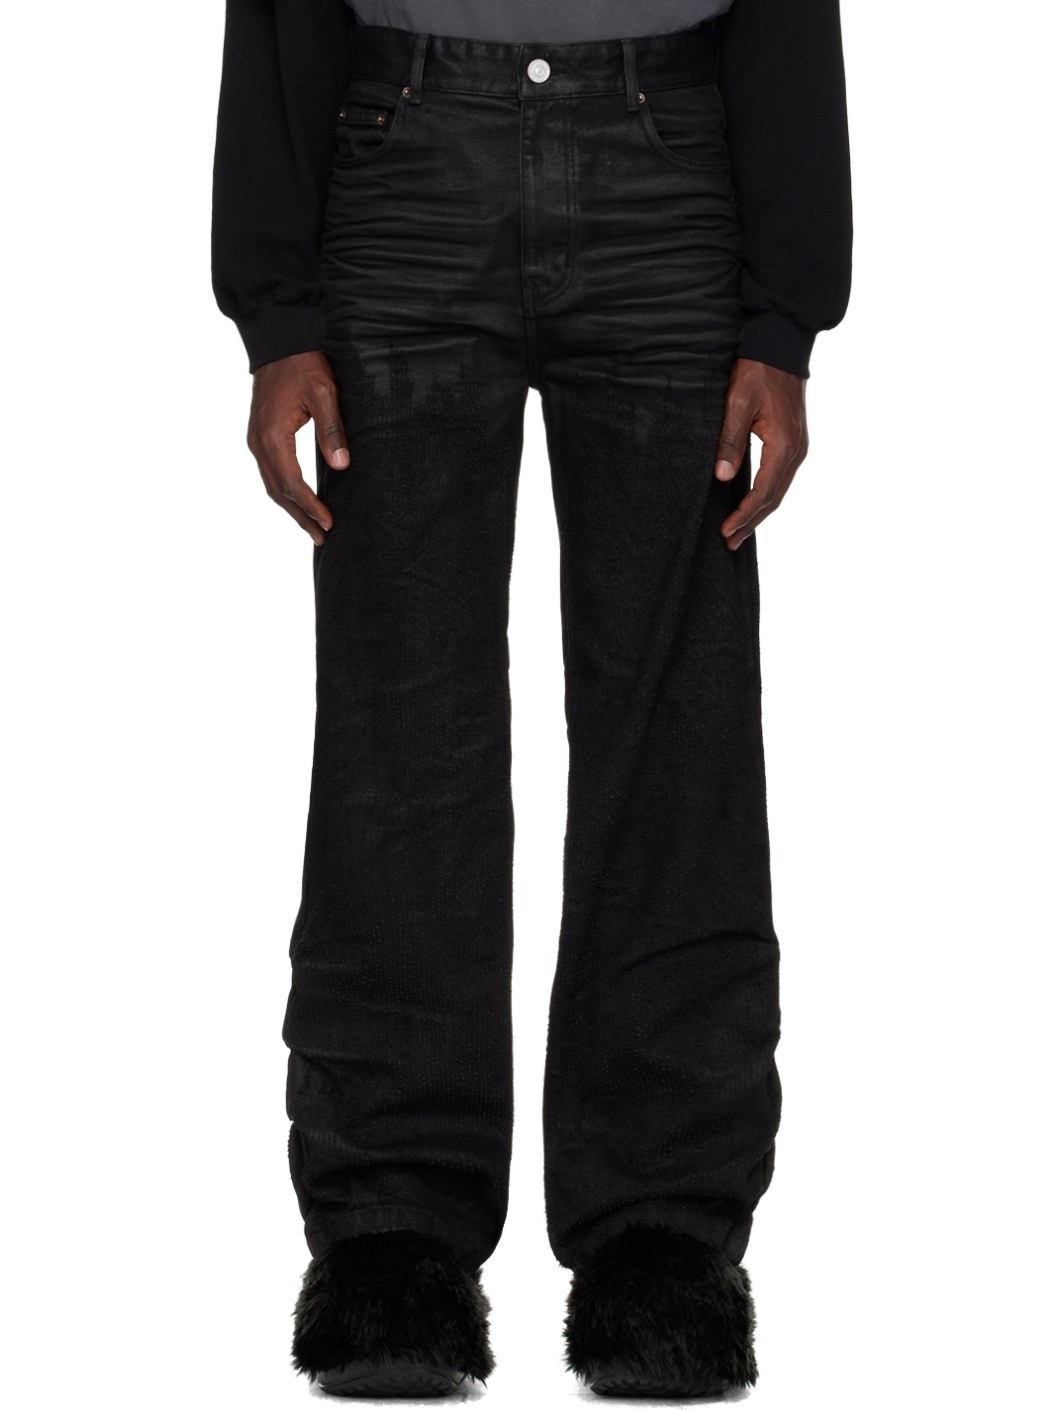 Black Distressed Thread Jeans - 1